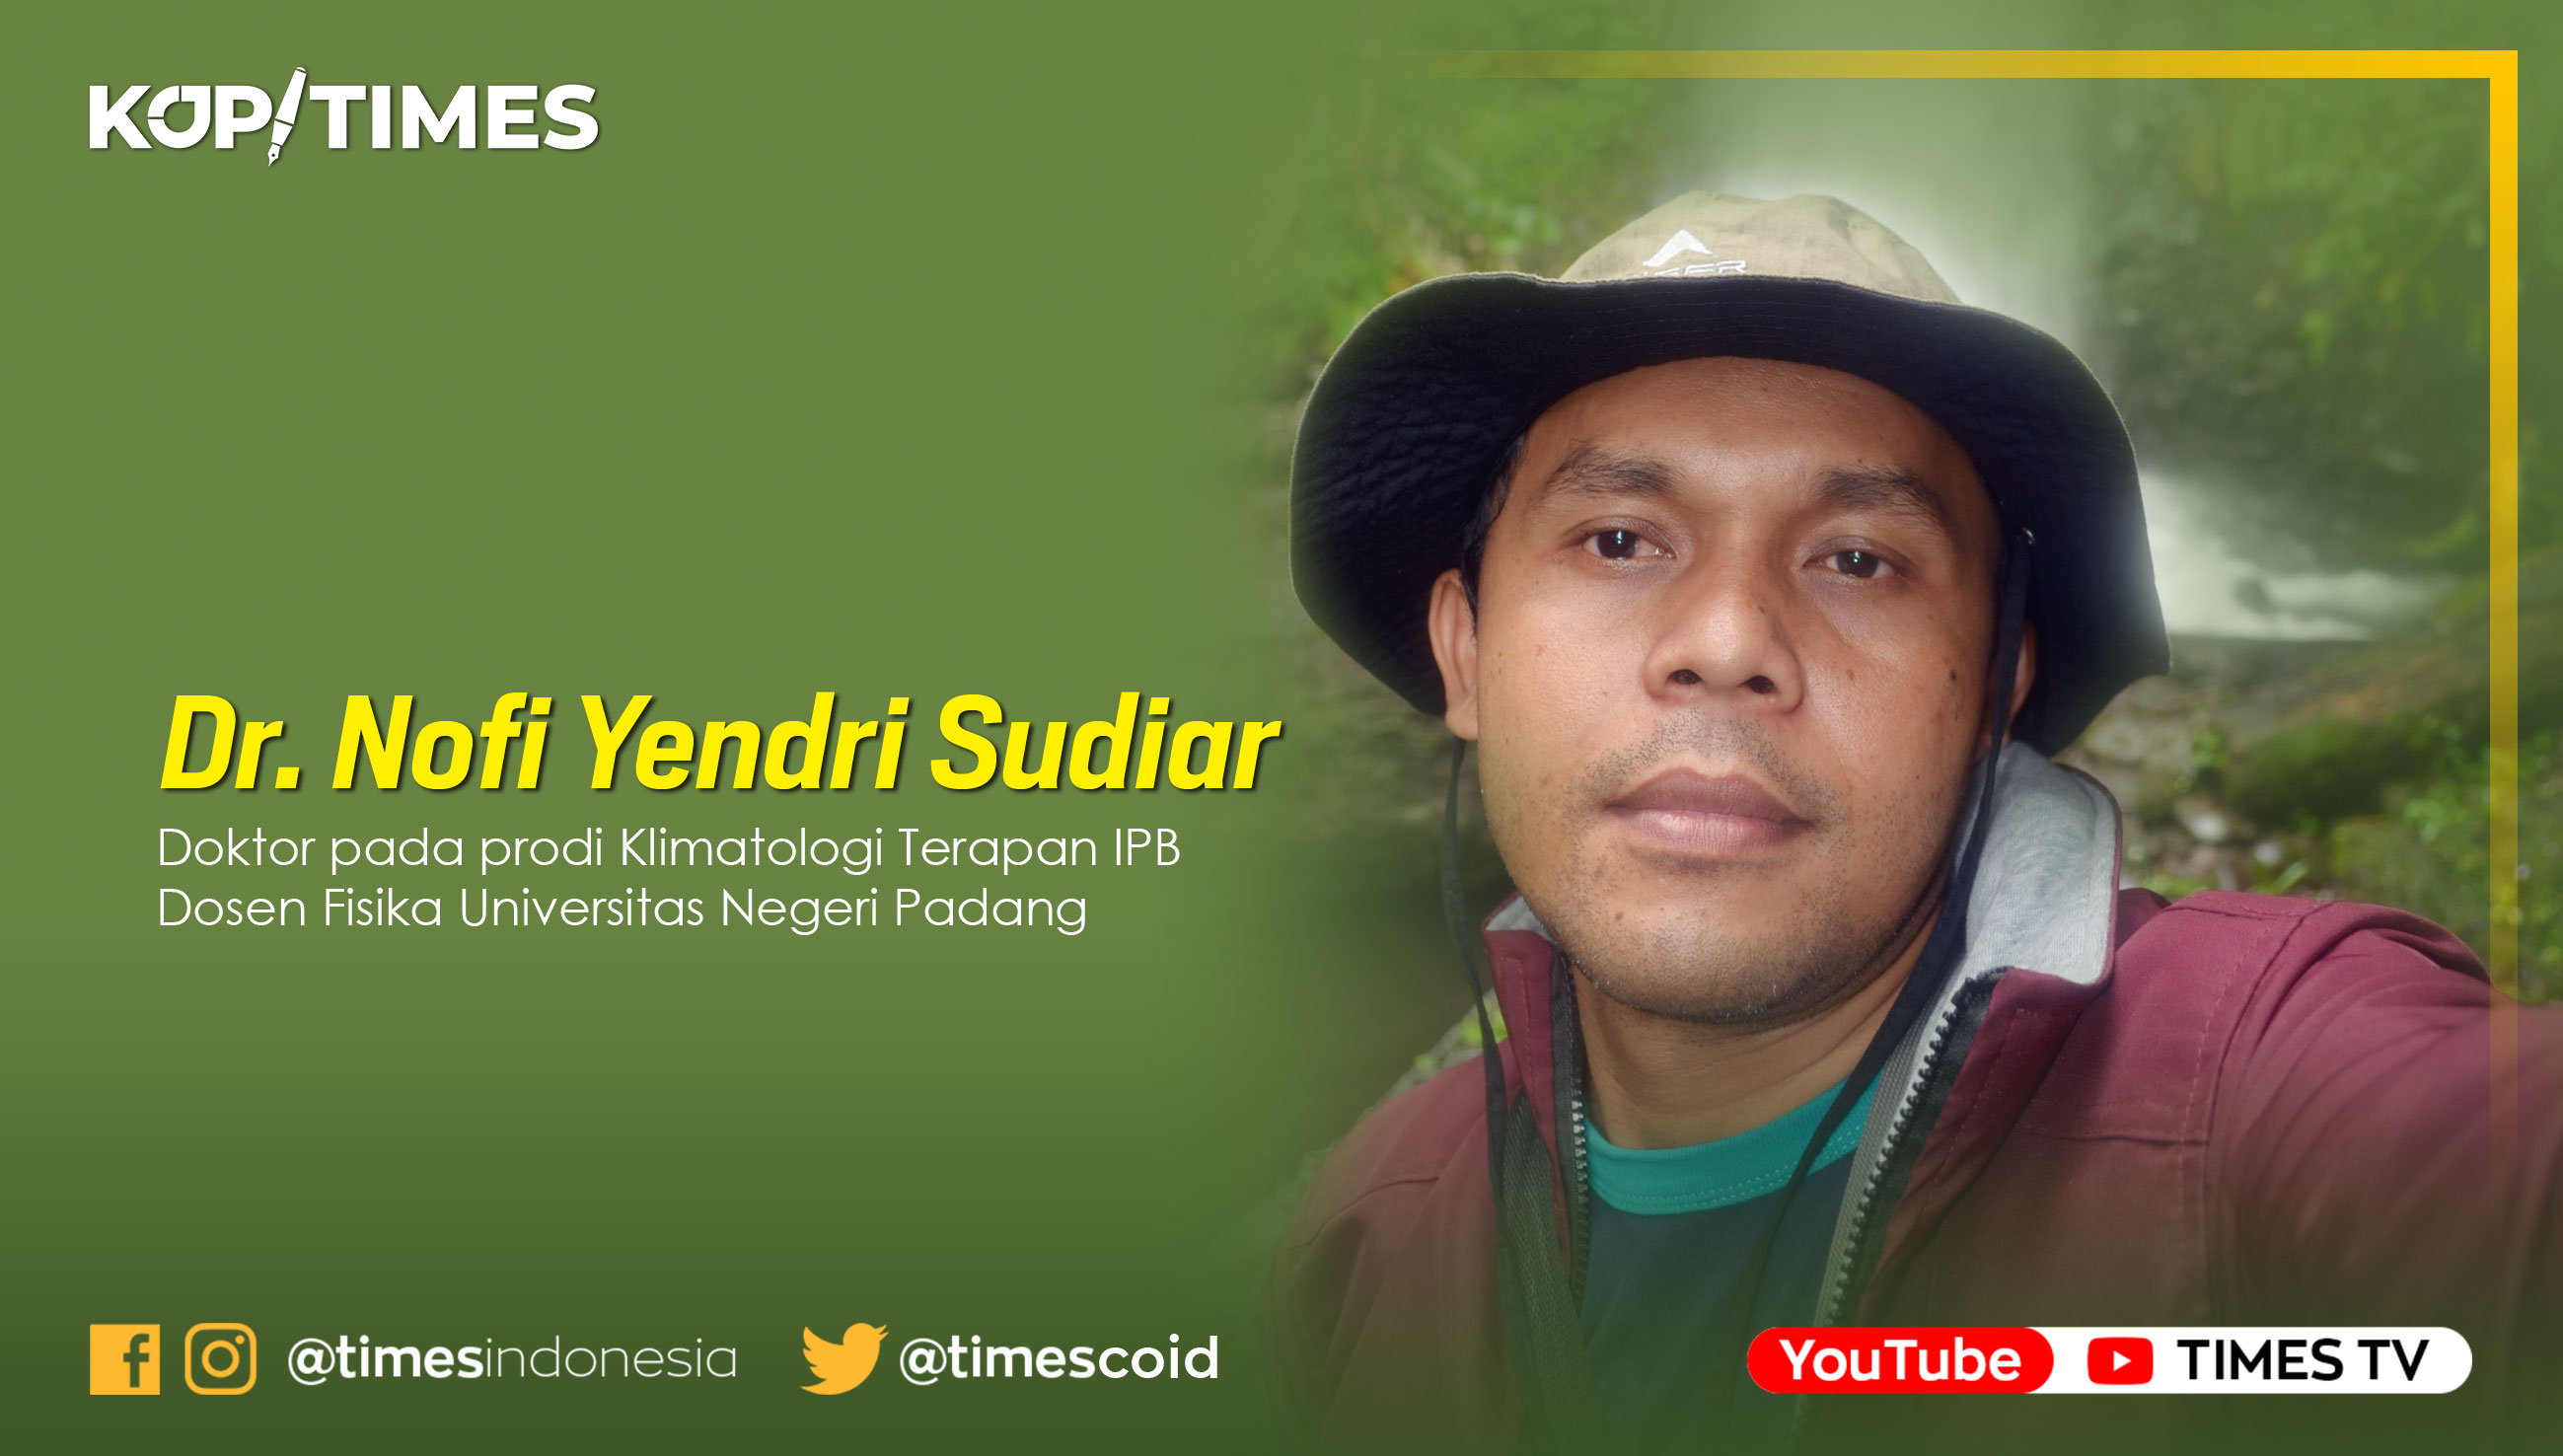 Dr. Nofi Yendri Sudiar dosen Fisika Universitas Negeri Padang.